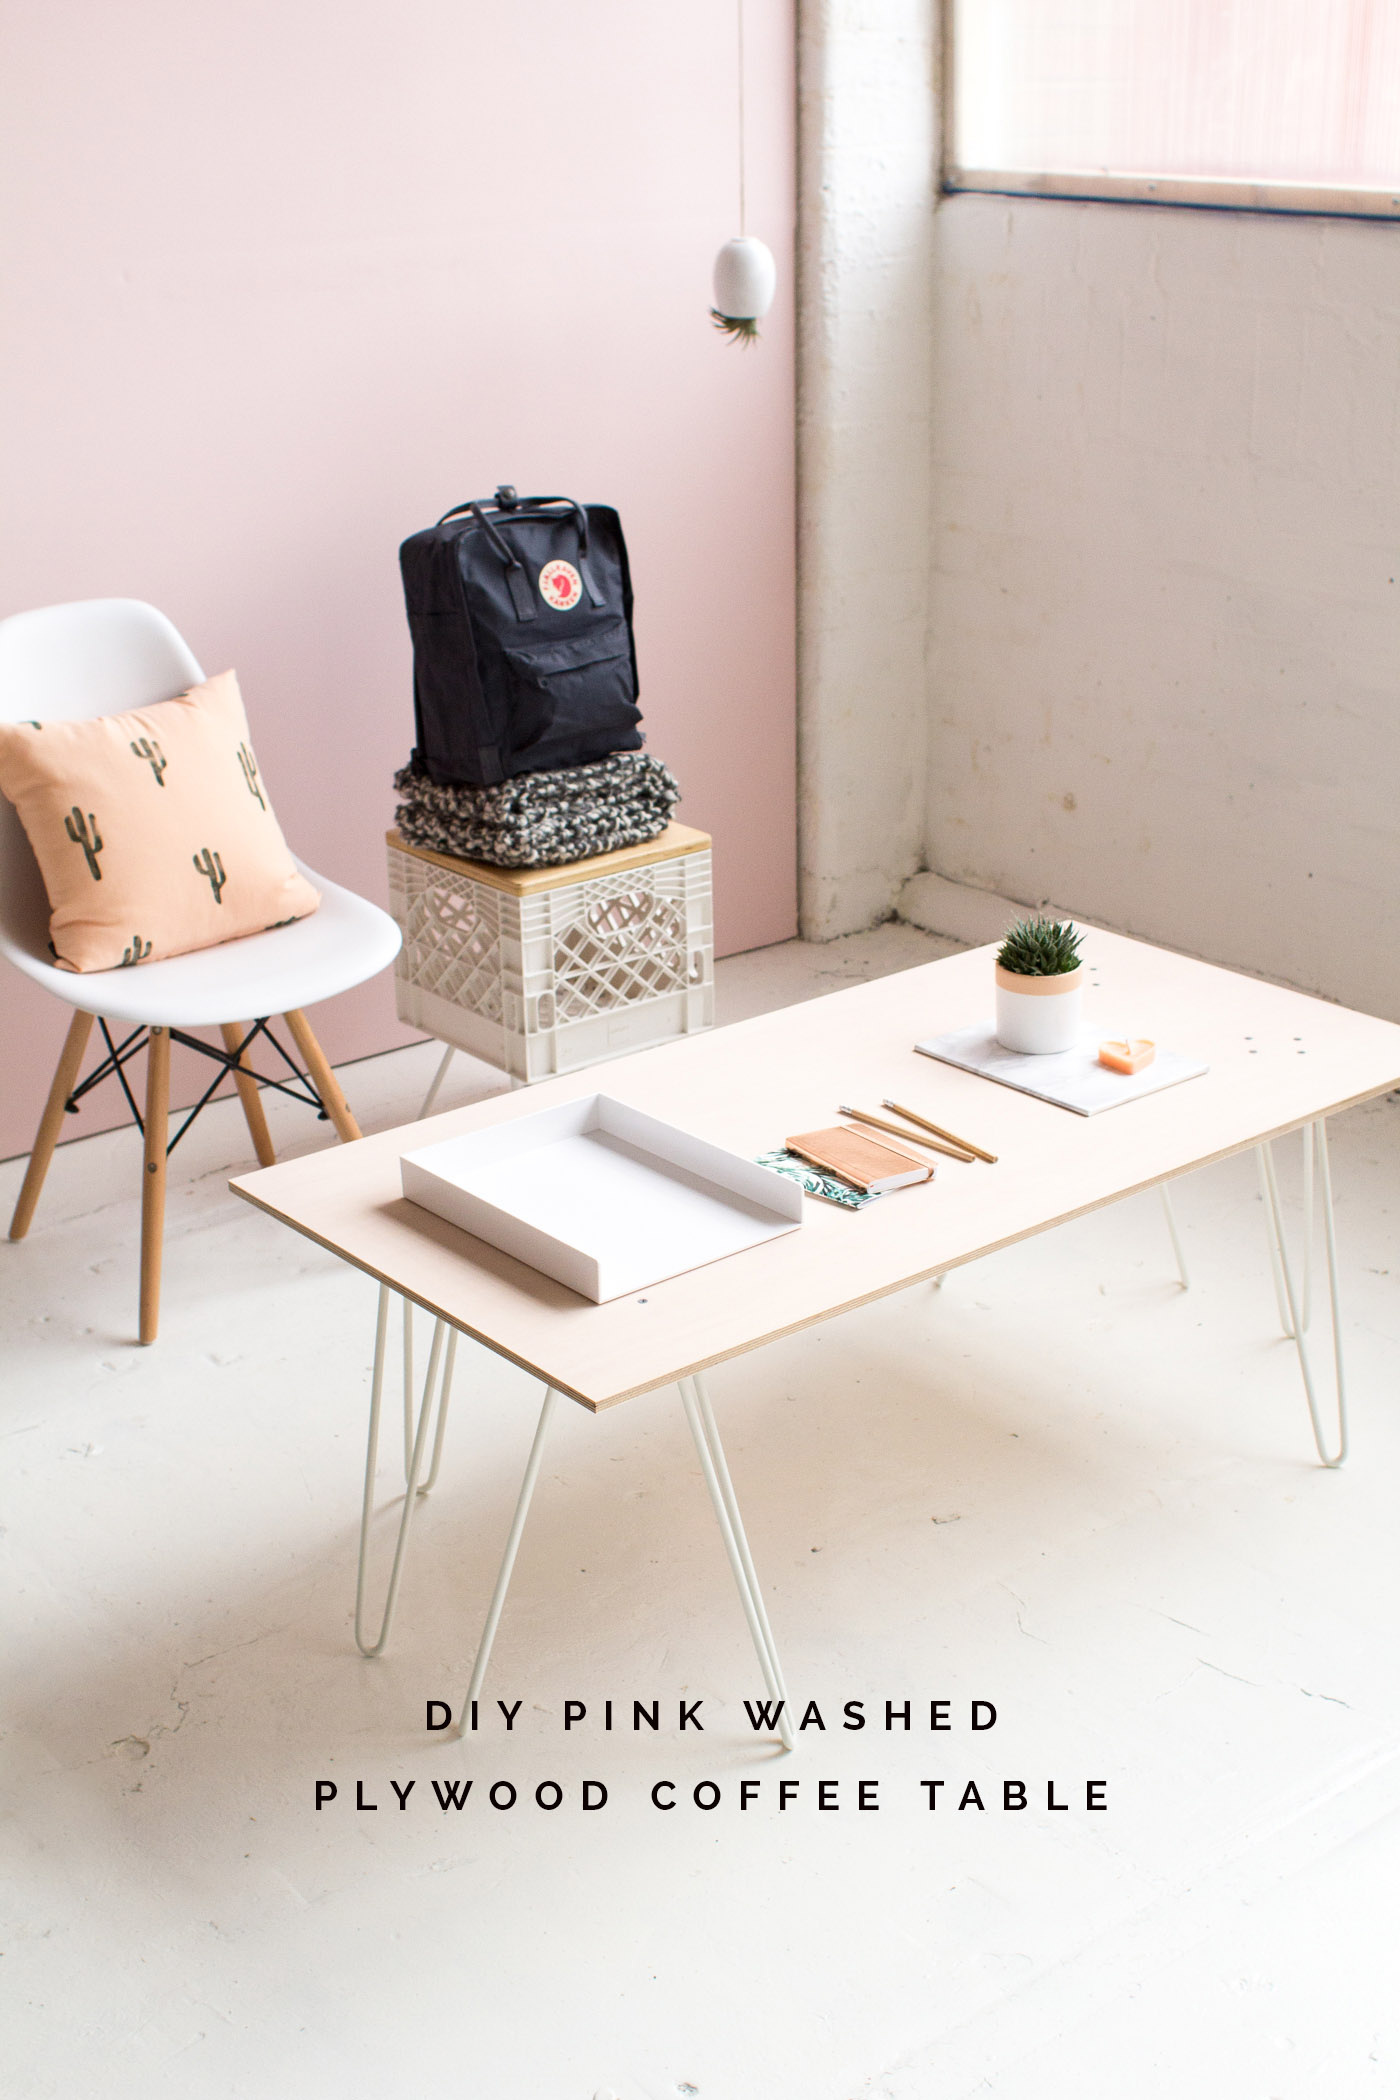 DIY SWENYO Skurniture Pink Washed Plywood Coffee Table tutorial | @fallfordiy